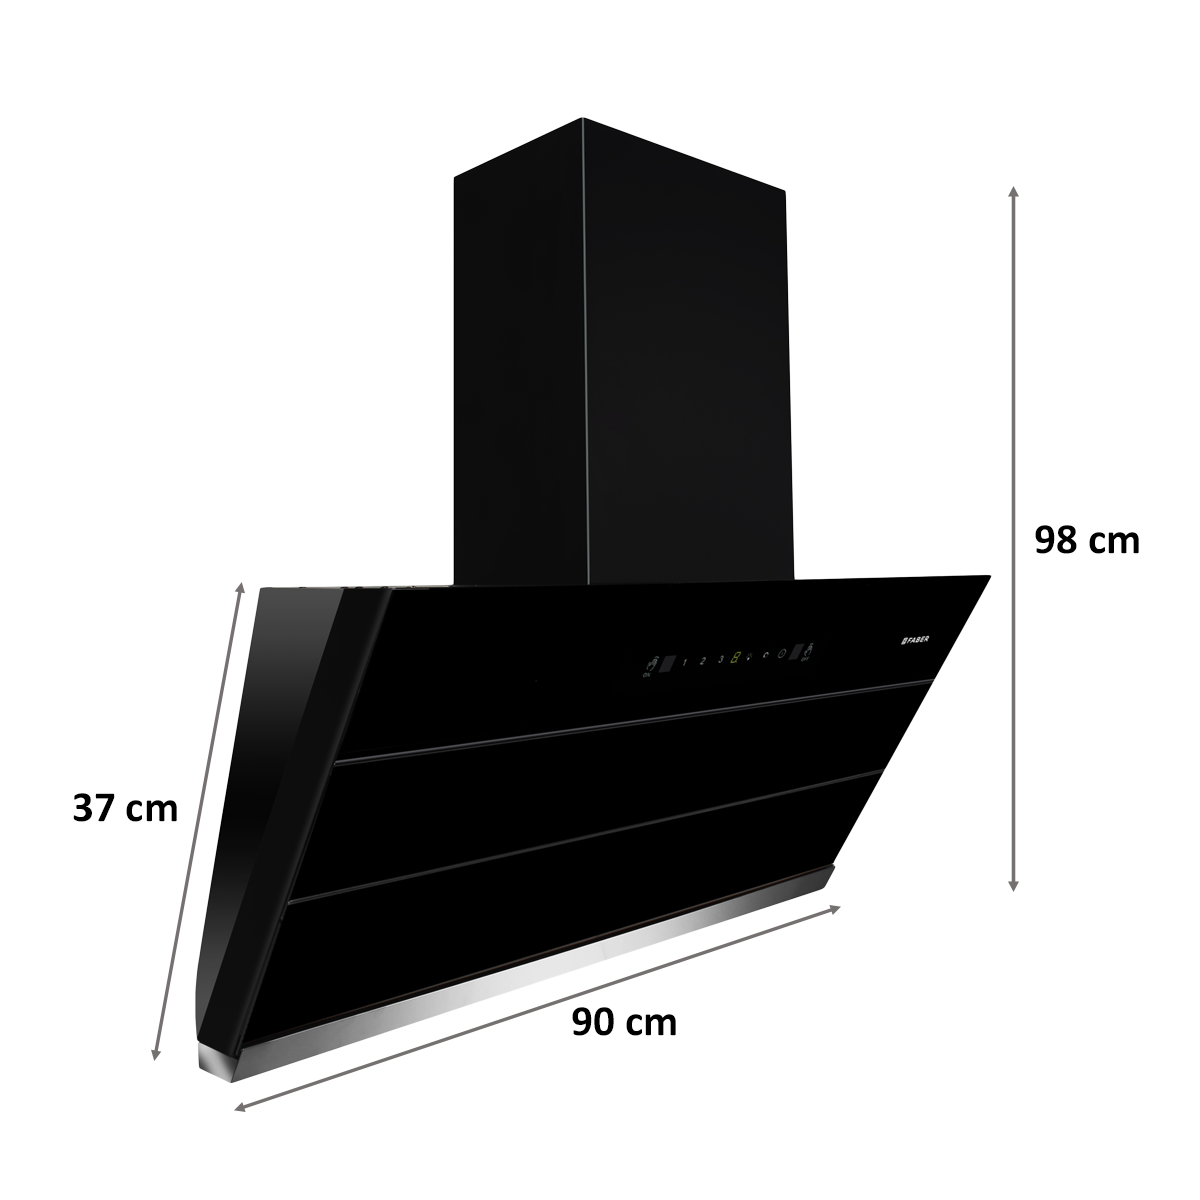 Faber Zenith FL SC AC 1350 m³/hr 90cm Wall Mount Chimney (Filterless Technology, 330.0628.742, Black)_2